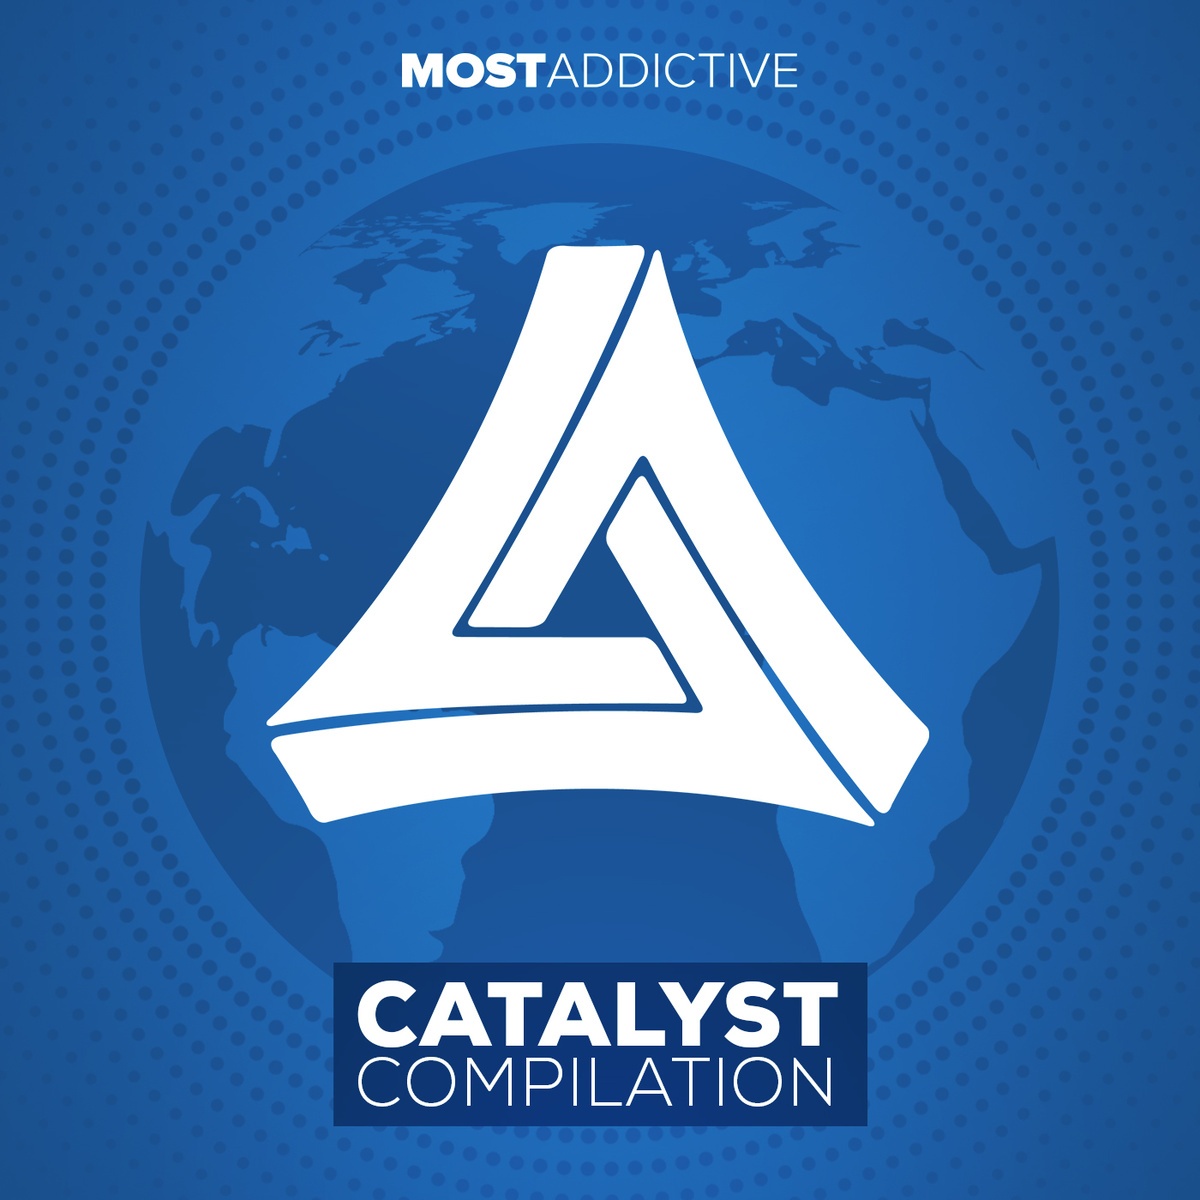 Most Addictive Catalyst Compilation